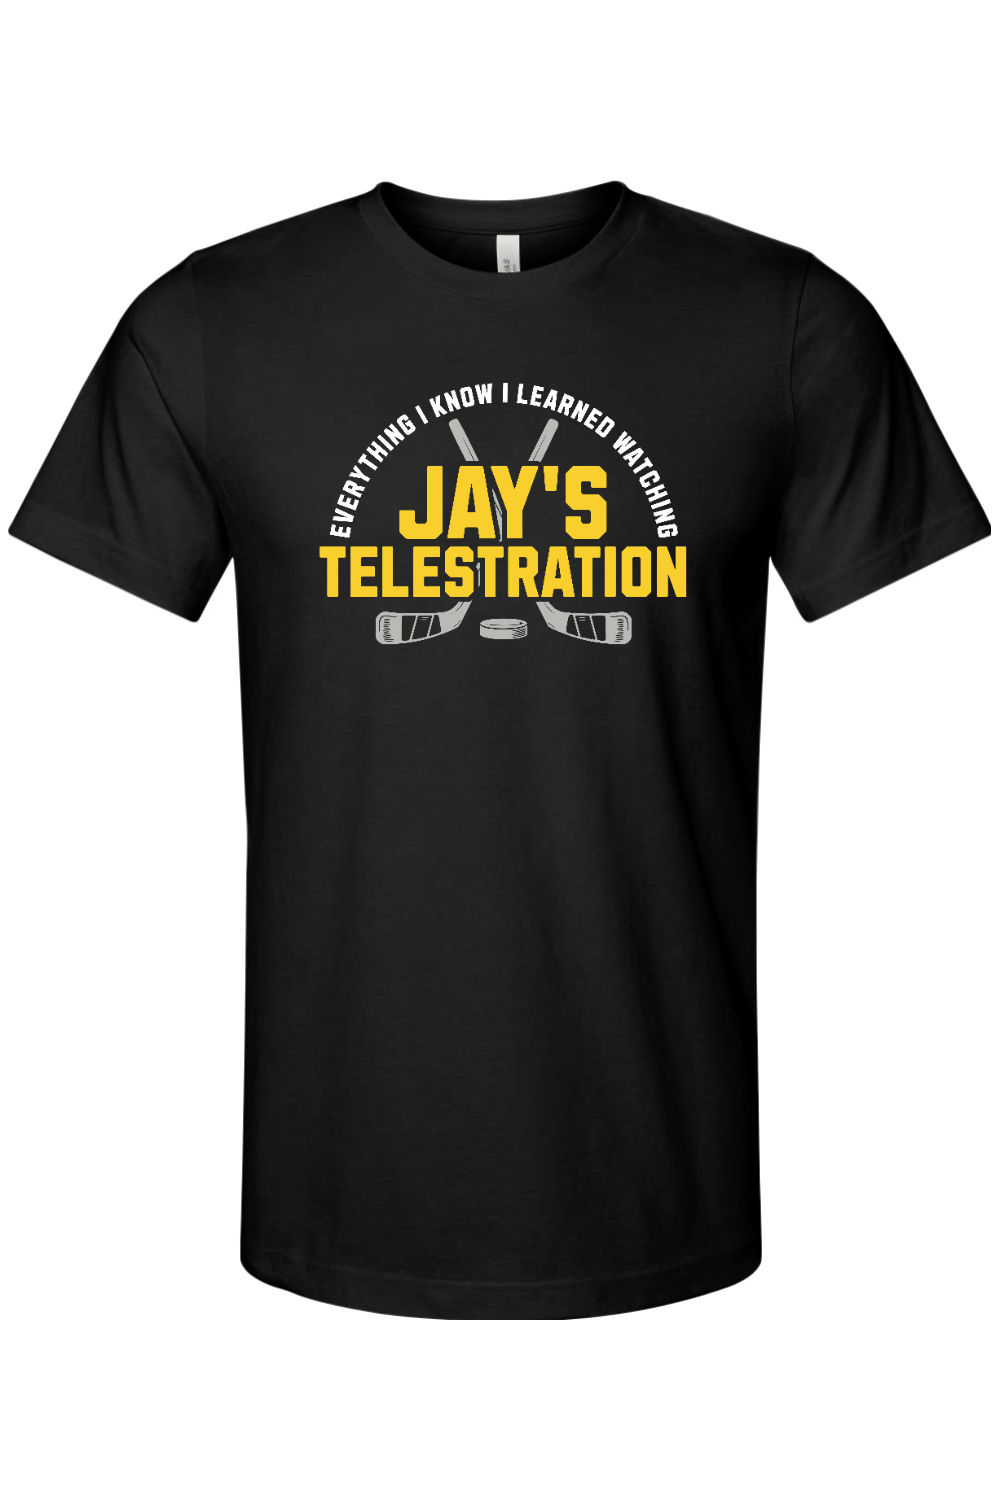 Jay's Telestration - Yinzylvania